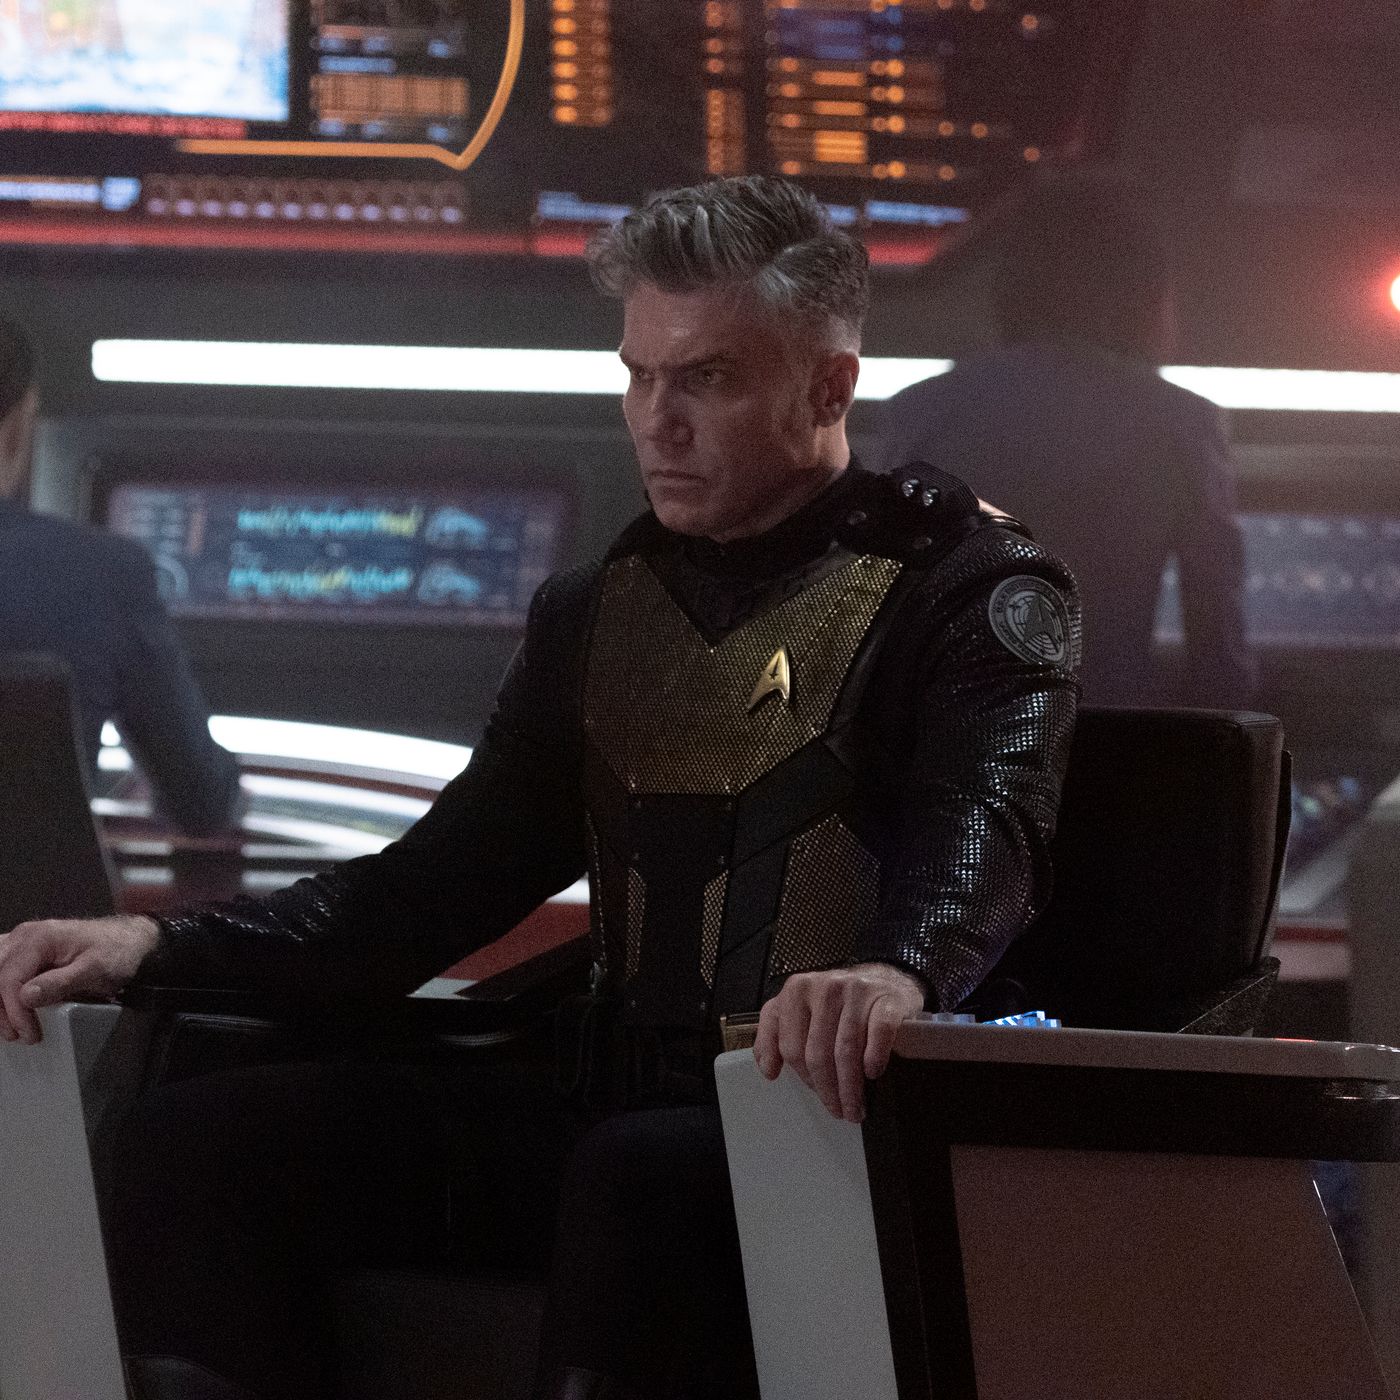 How Star Trek's The Best of Both Worlds Altered the Franchise